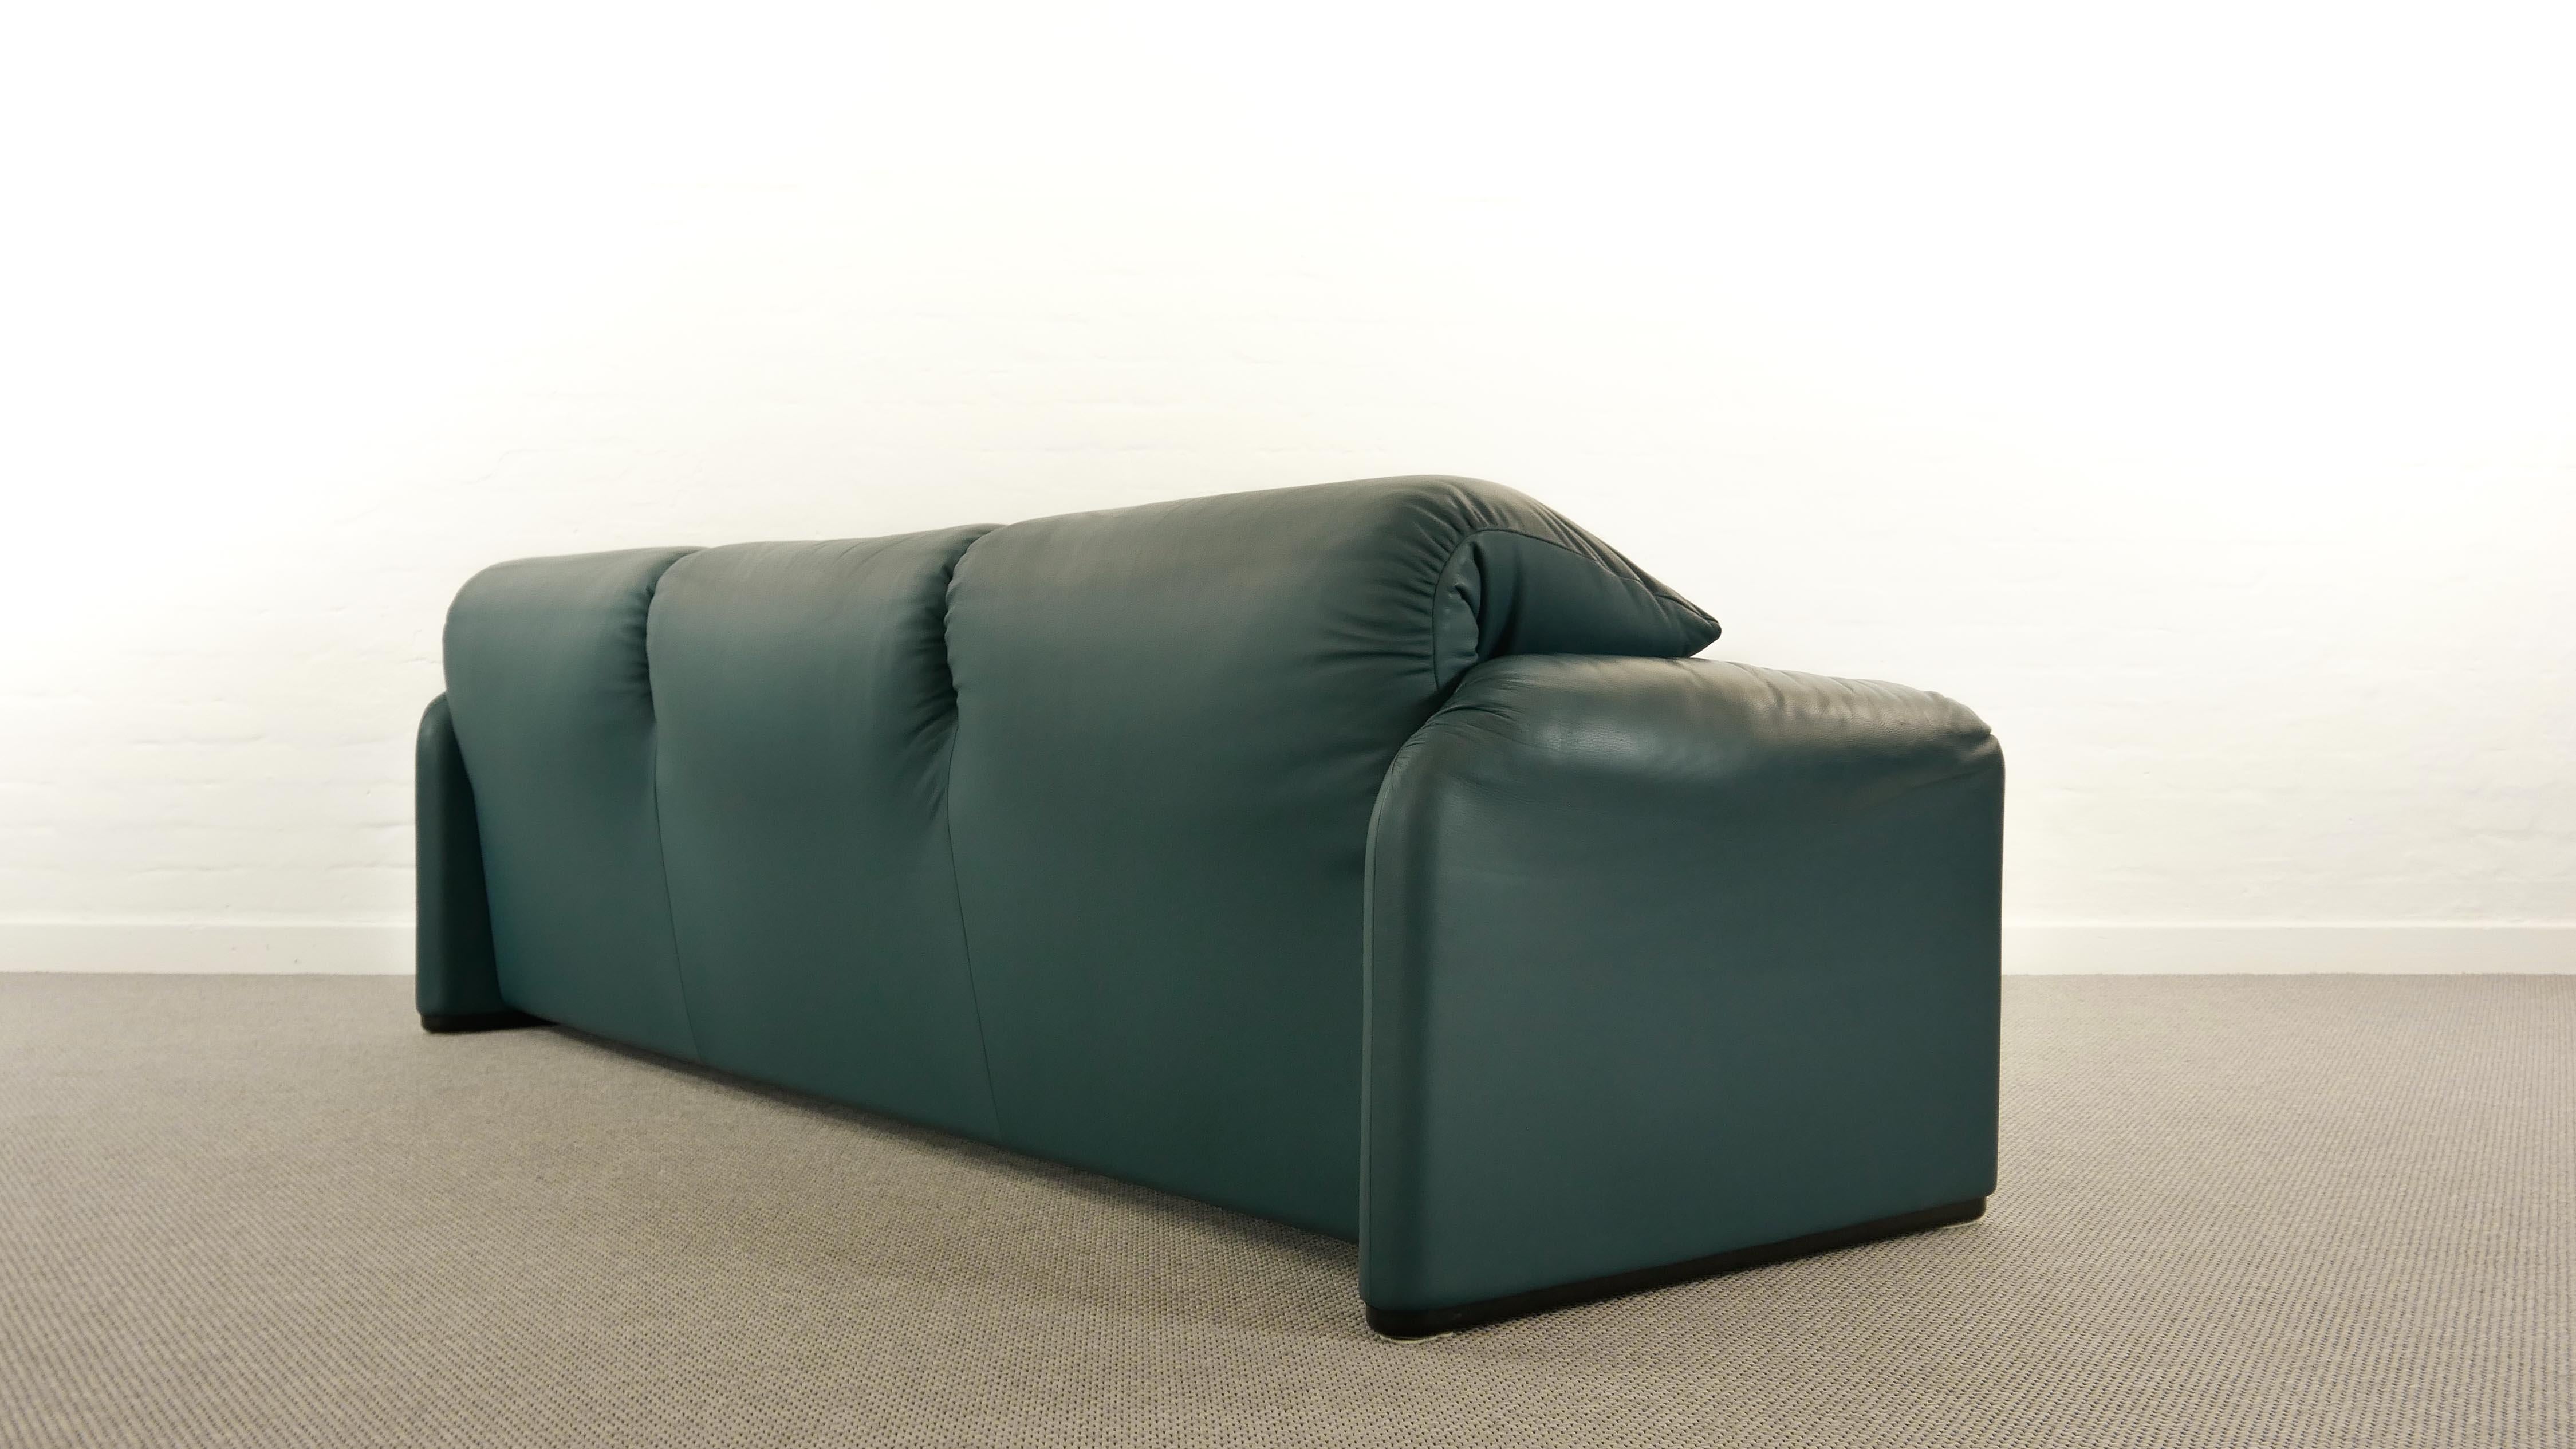 Cassina Maralunga 3-Seat Sofa by Vico Magistretti in Petrol-Darkgreen Leather 1